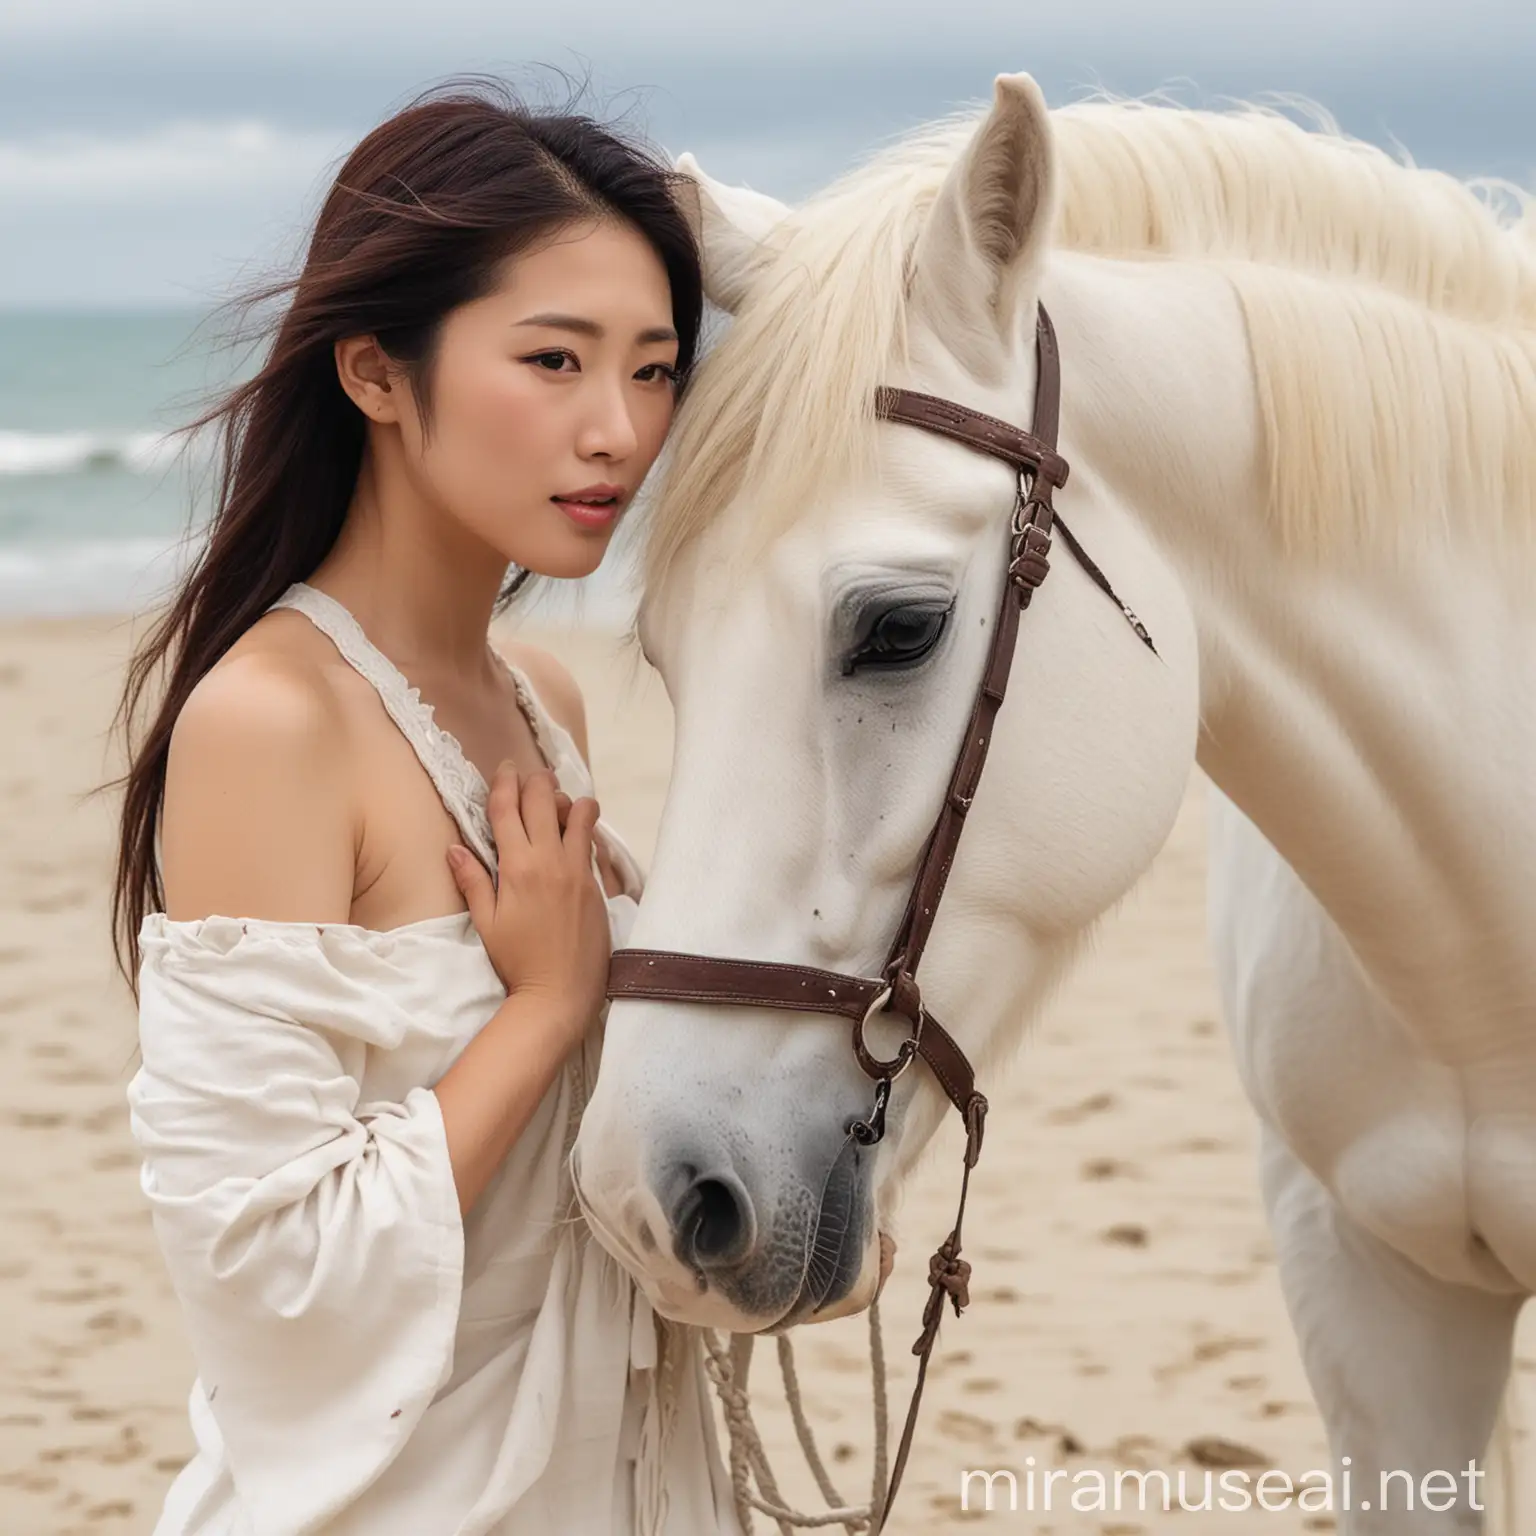 Seorang jepang berwajah cantik, berpose dengan seekor kuda putih di pinggir pantai sambil mengelus wajah kudanya.